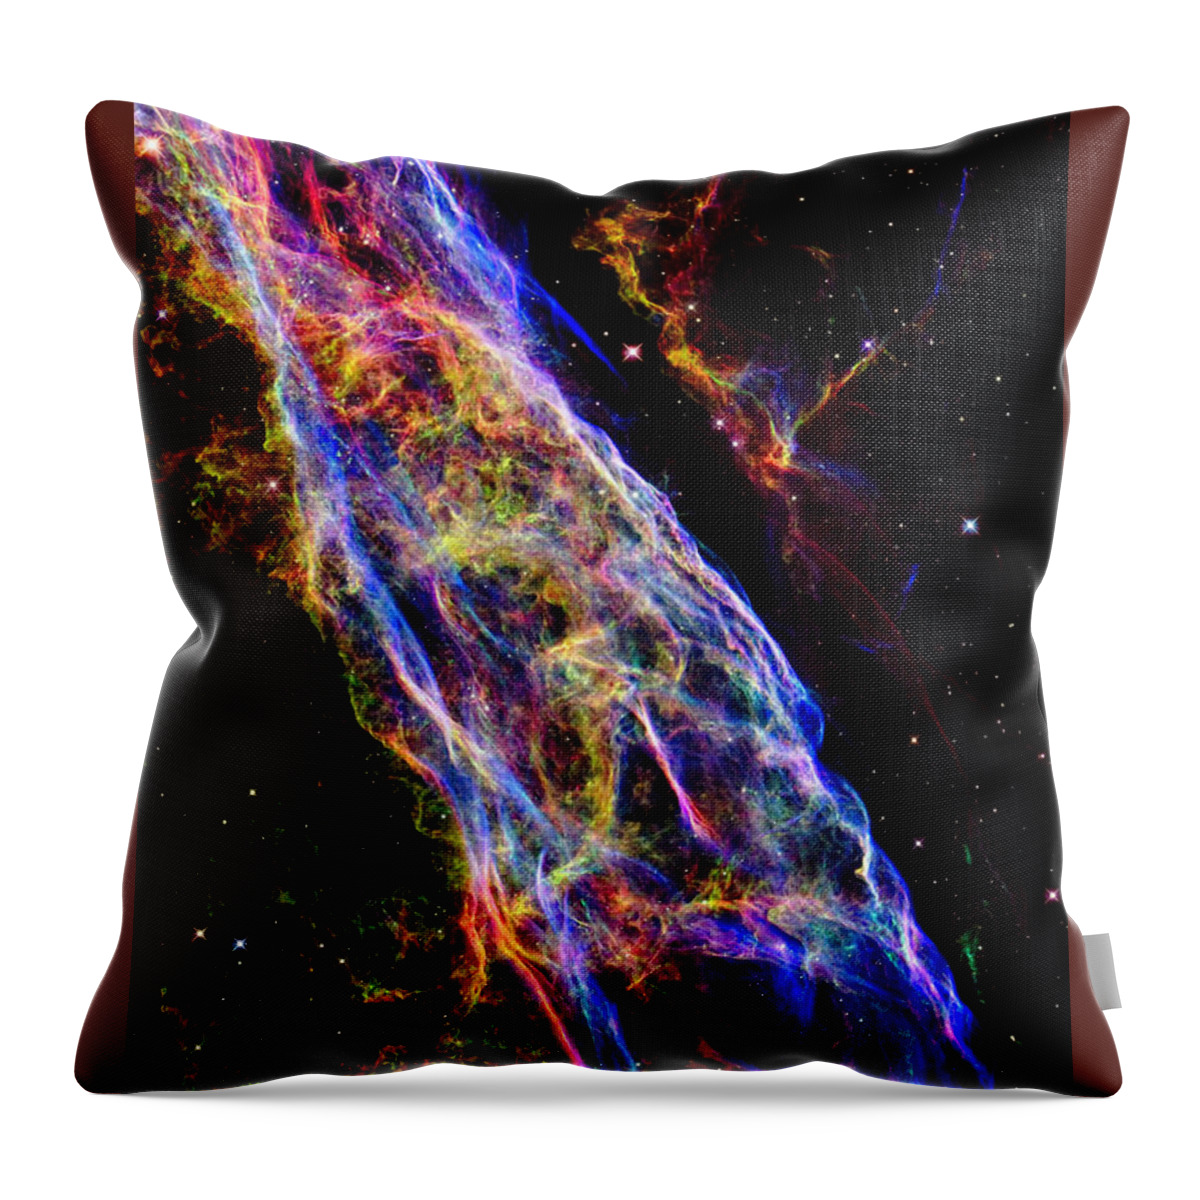 Veil Nebula Throw Pillow featuring the photograph Veil Nebula by Weston Westmoreland